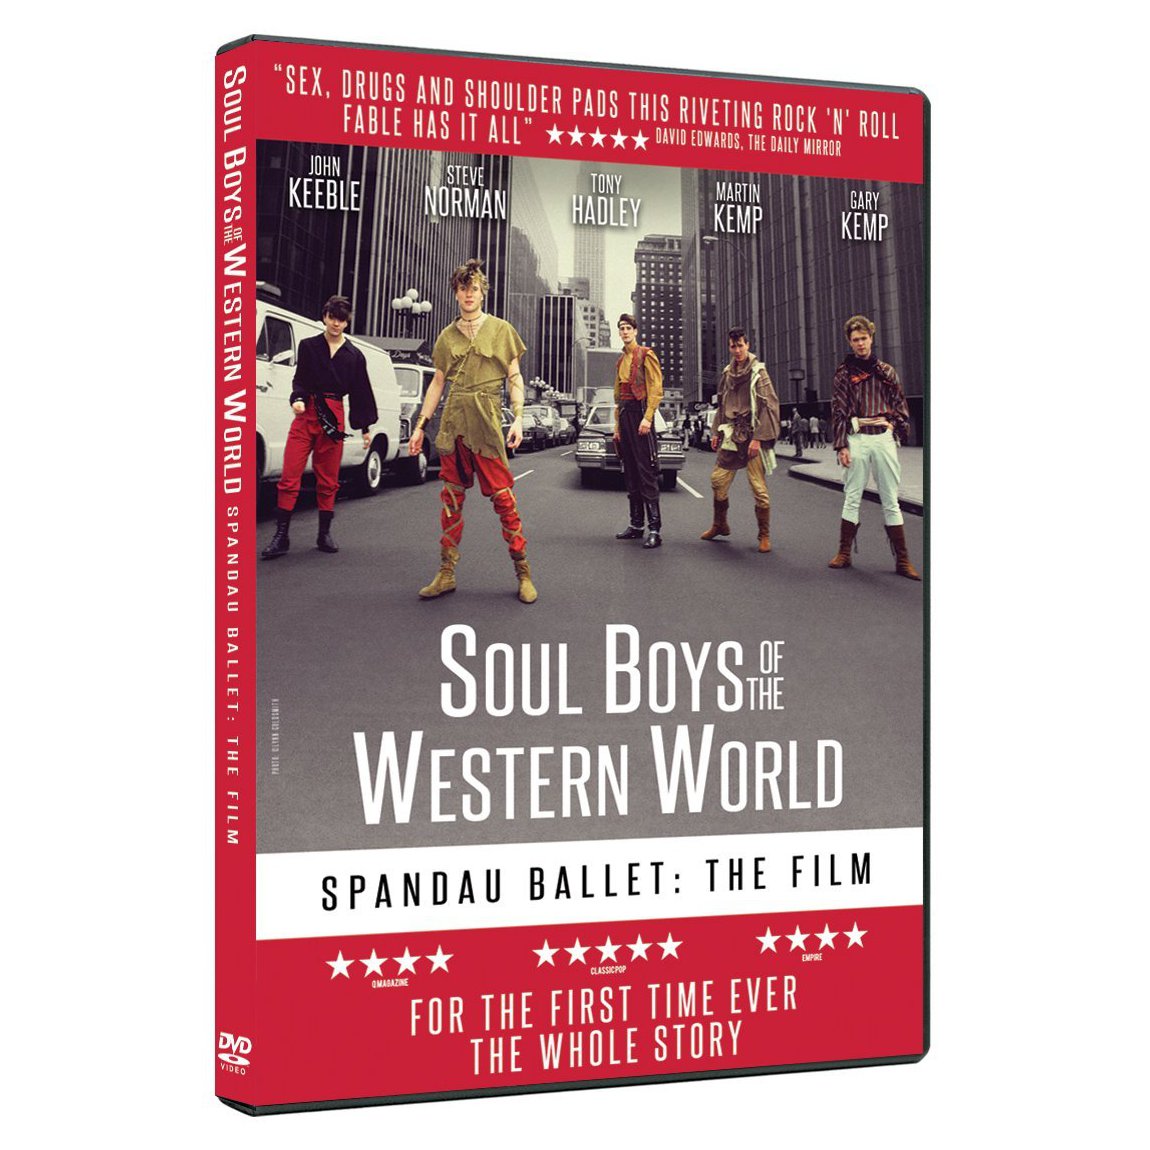 Spandau Ballet - Spandau Ballet The Film - Soul Boys Of The Western World: DVD